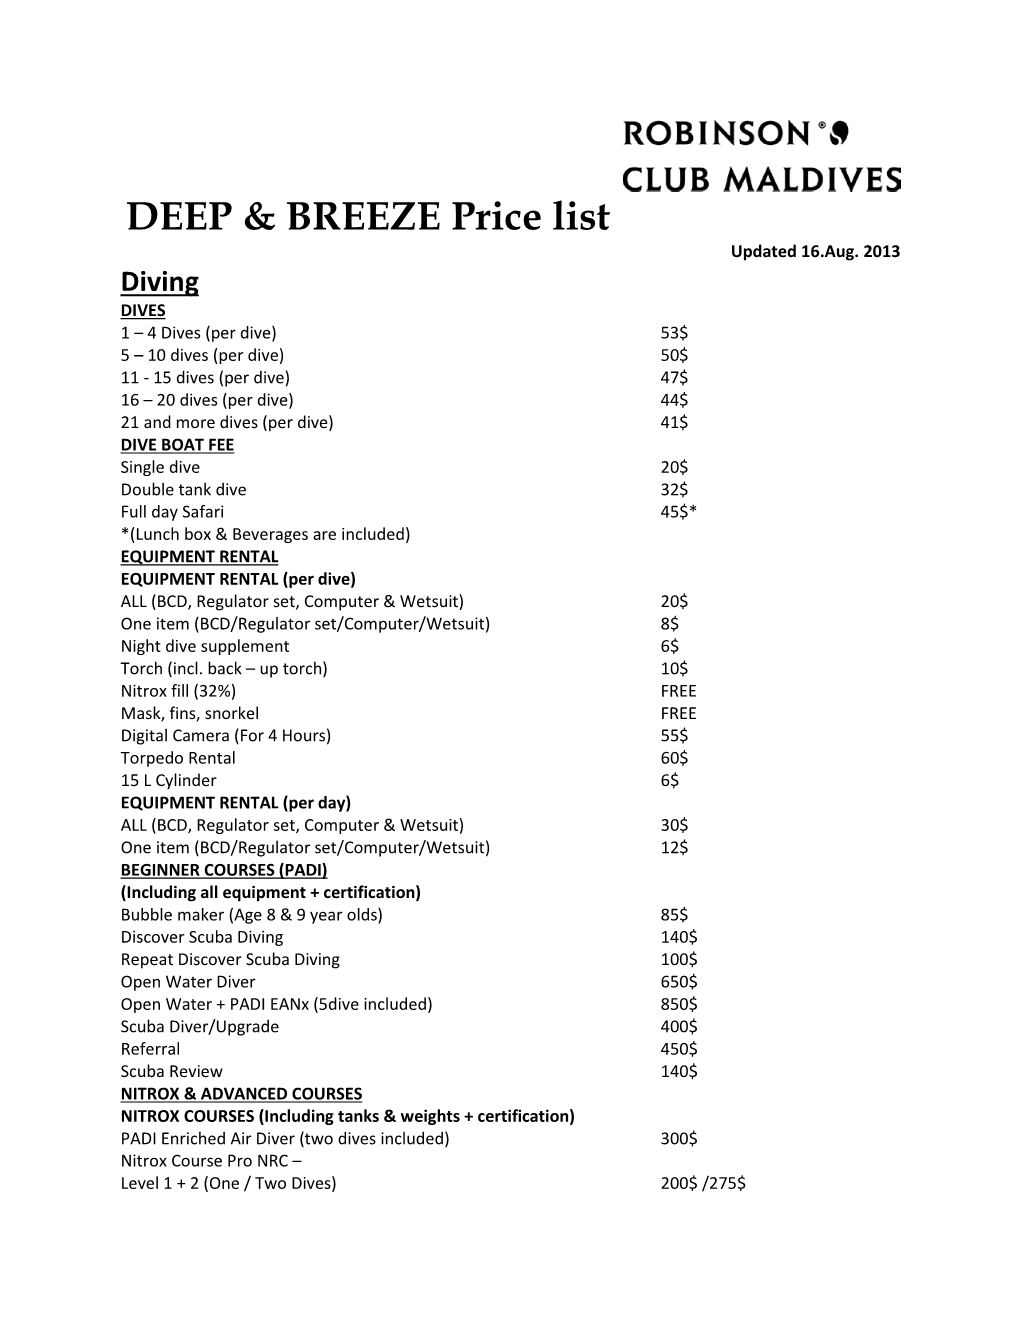 DEEP & BREEZE Price List